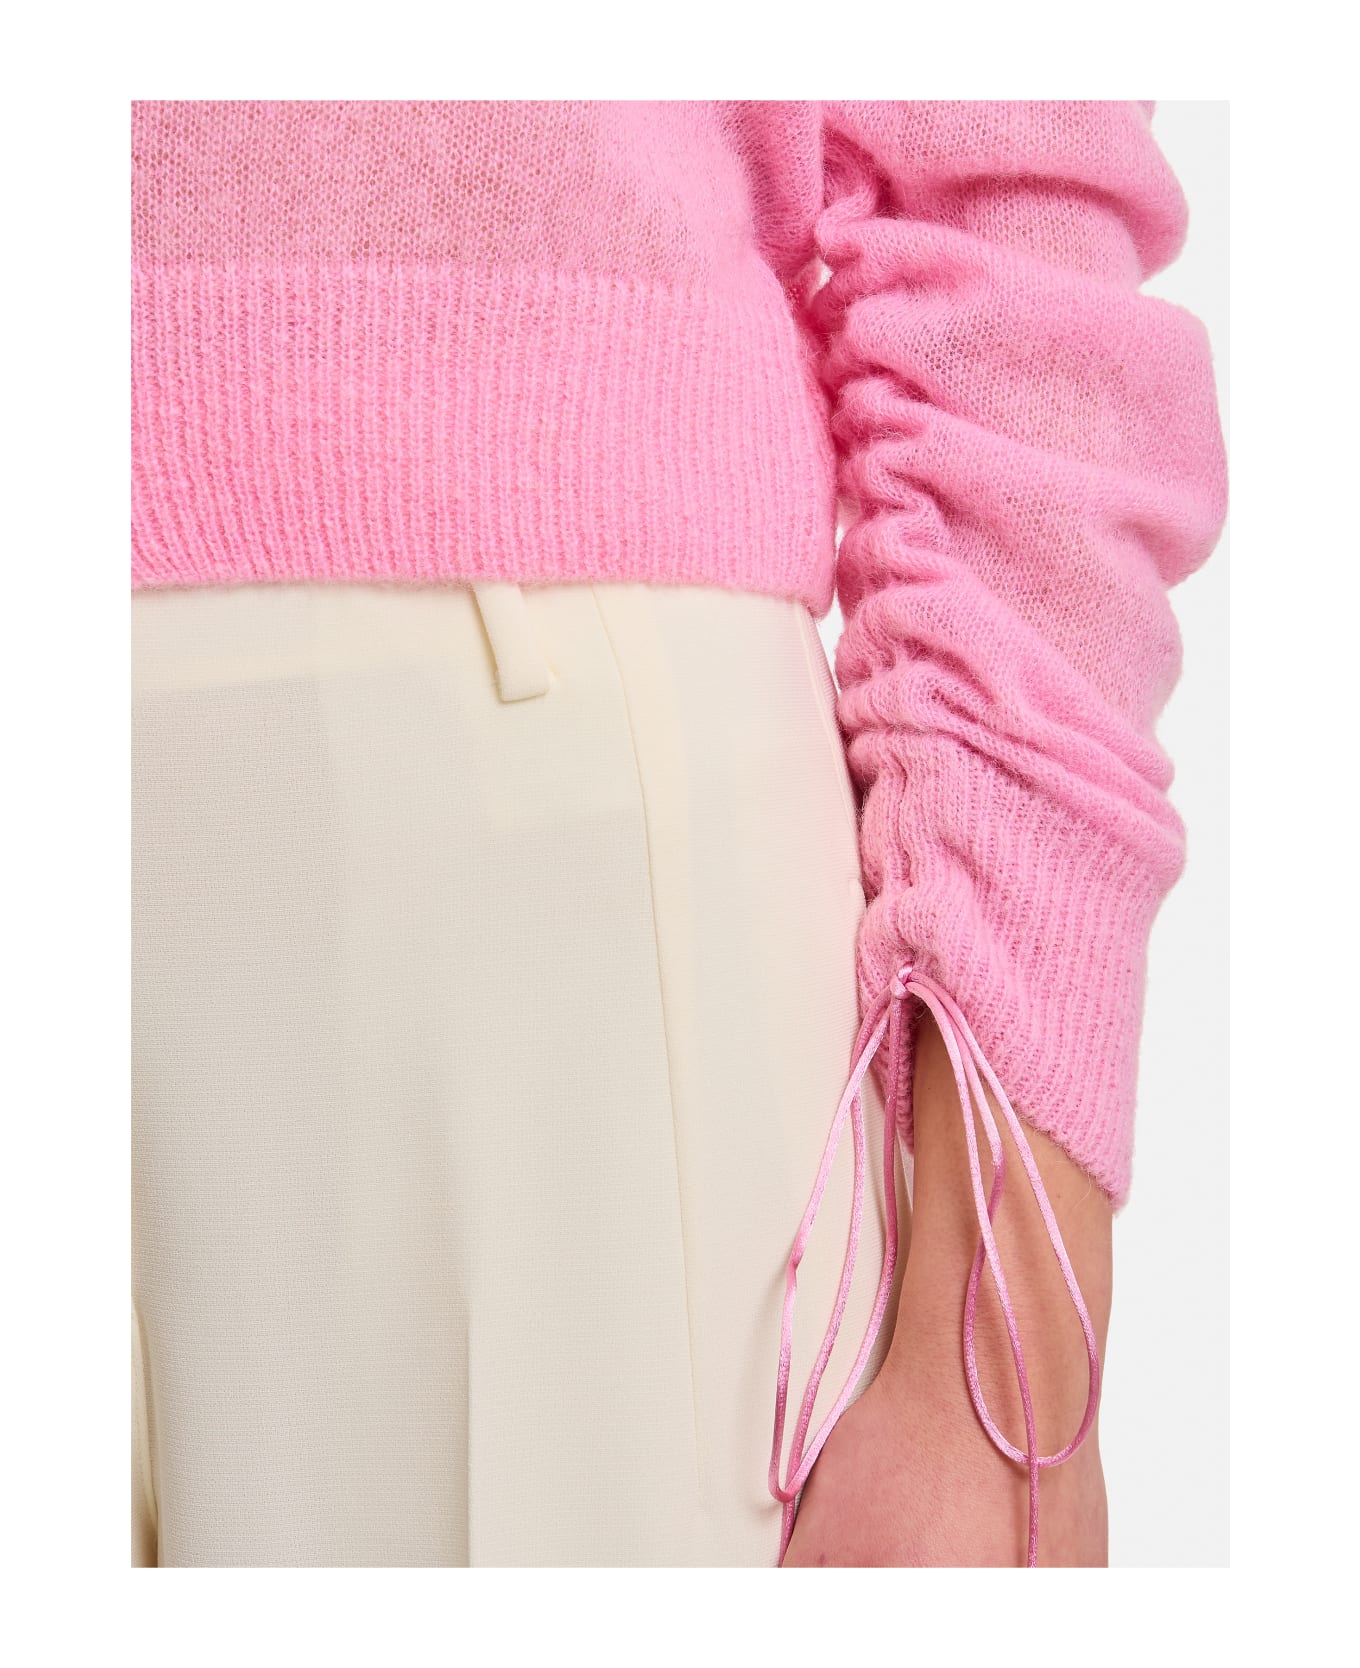 Cecilie Bahnsen Vicki Venus Soft Knit Cardigan - Pink